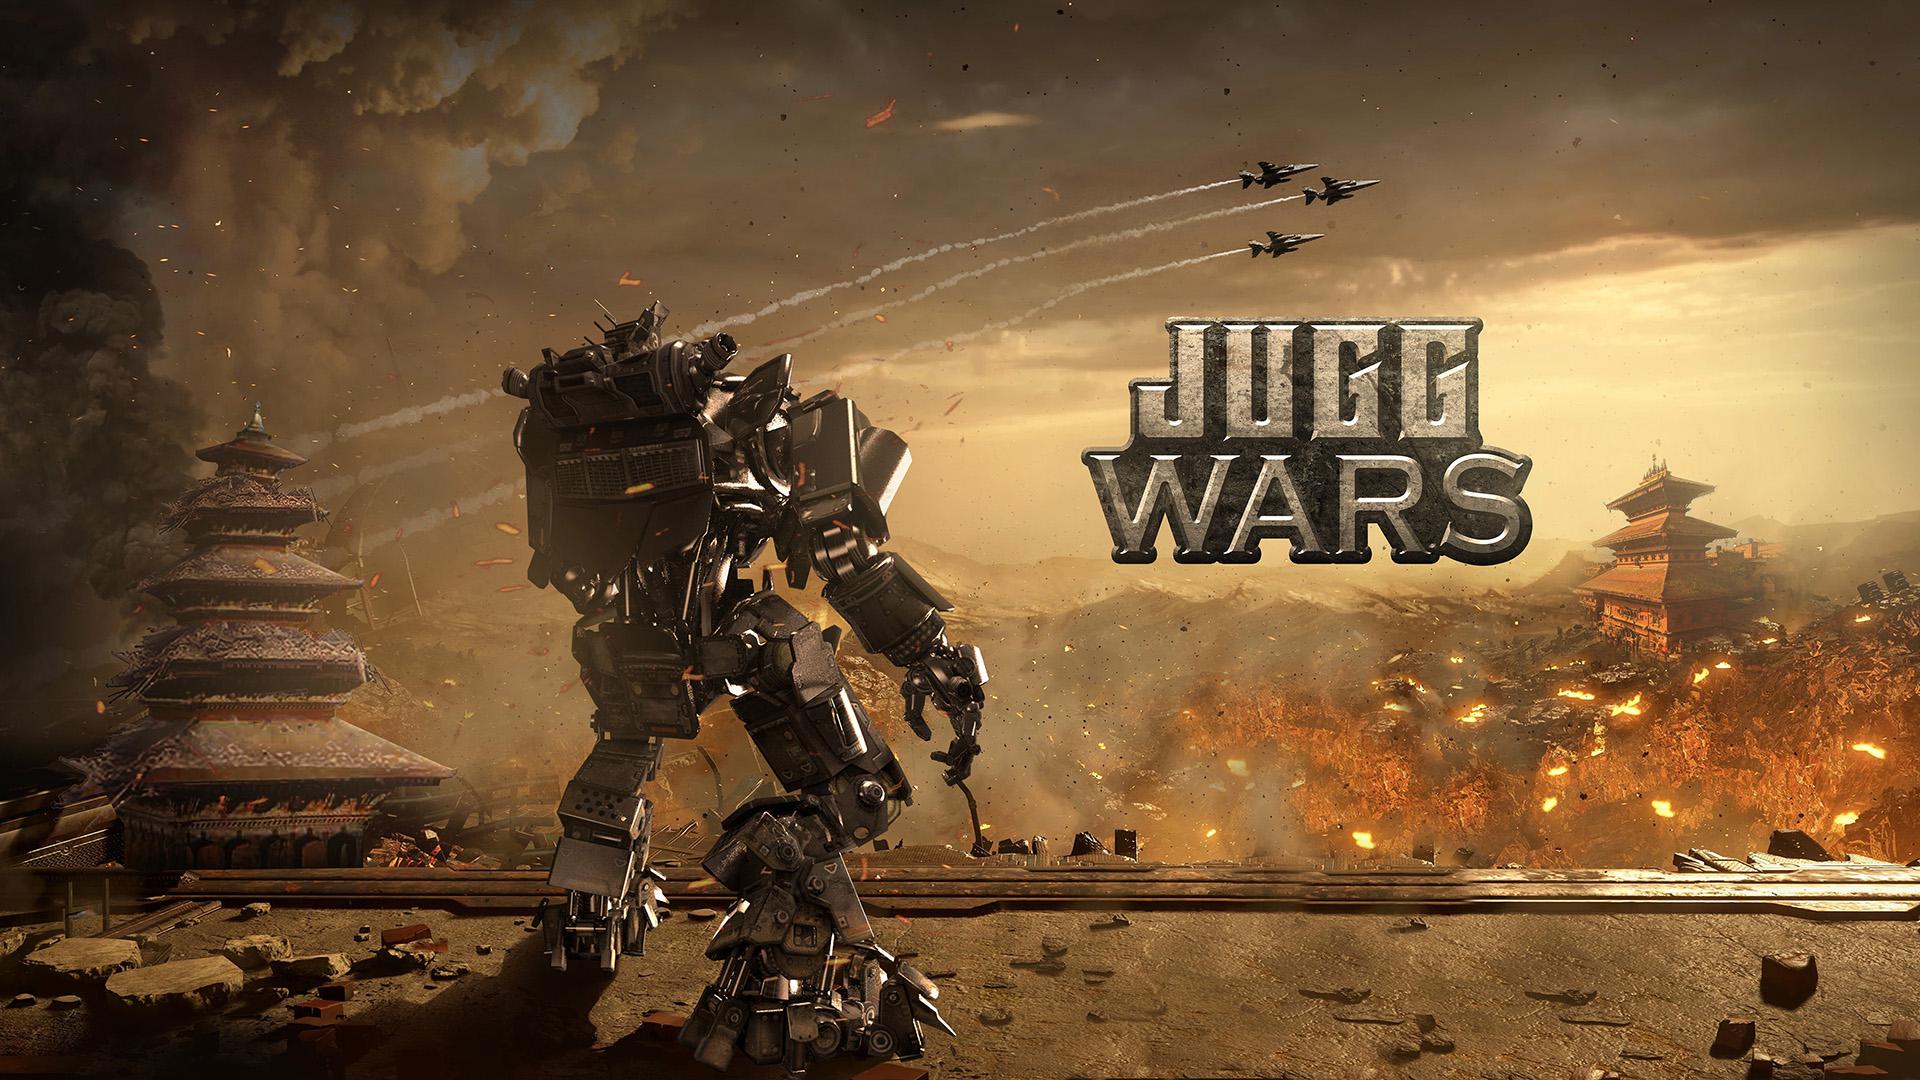 Jugg Wars (Early Access)